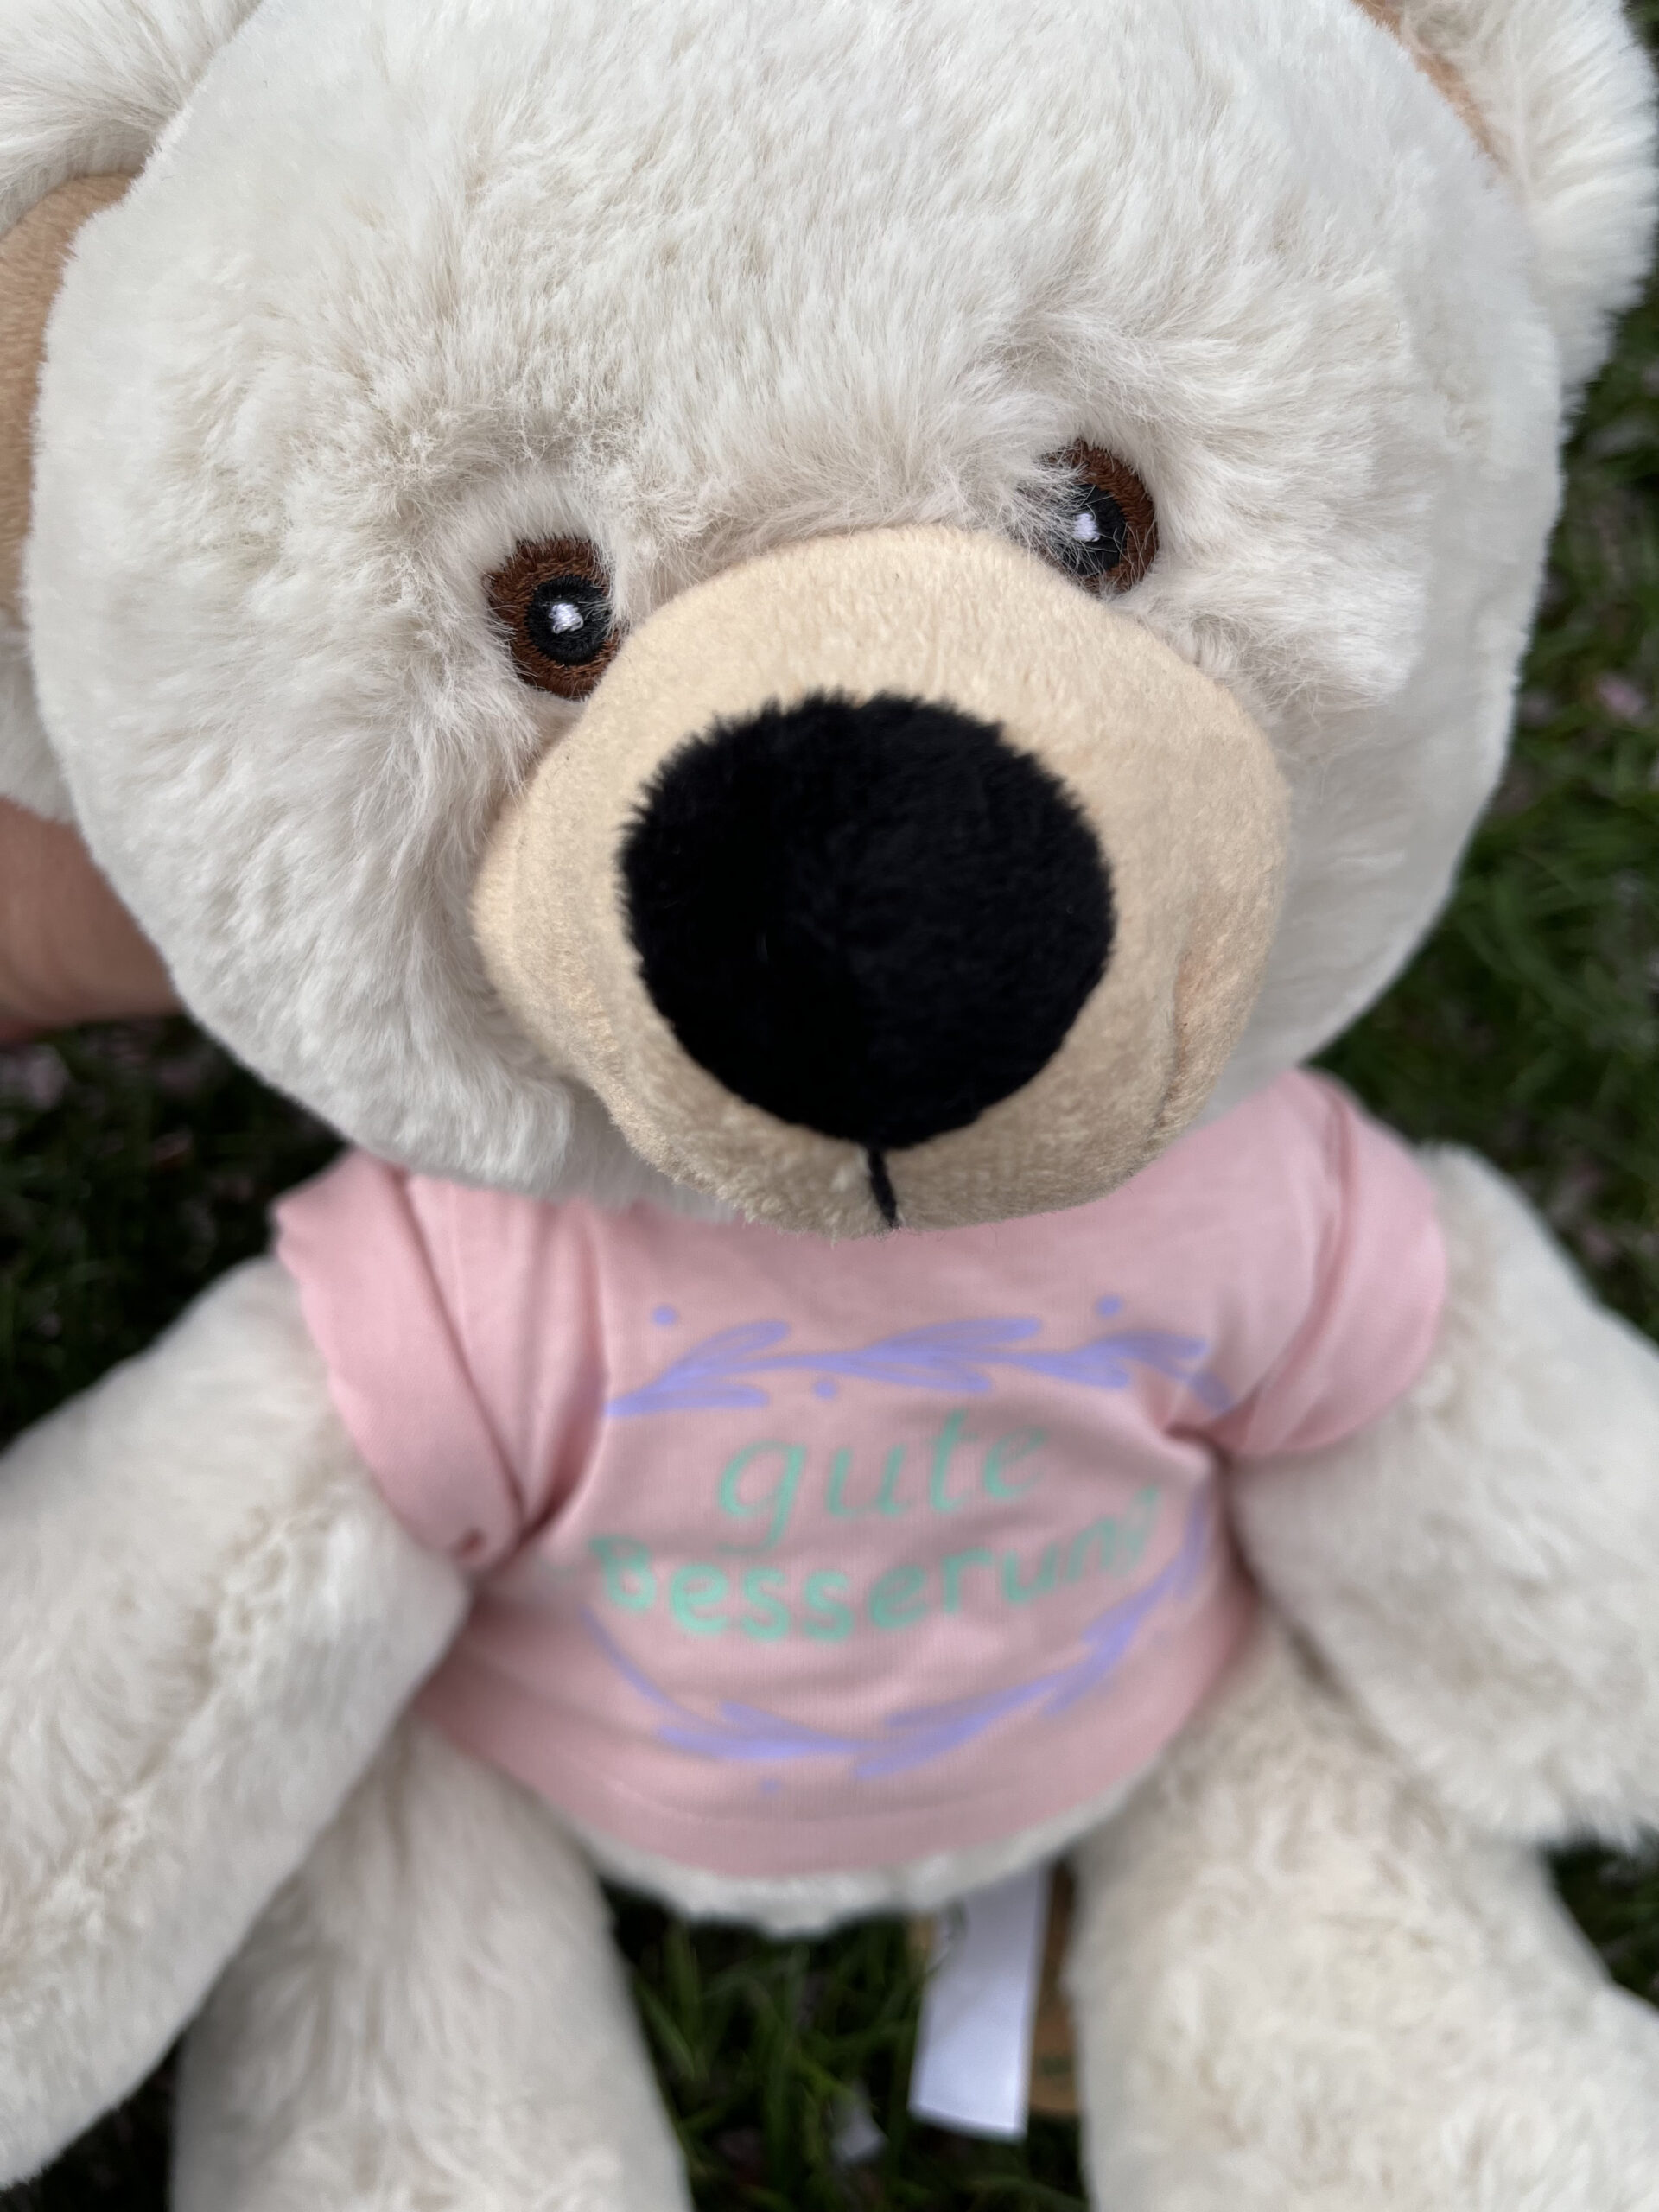 IMG 9395 scaled - großer Recycel- Teddybär  mit Wunsch-Print auf dem Shirt